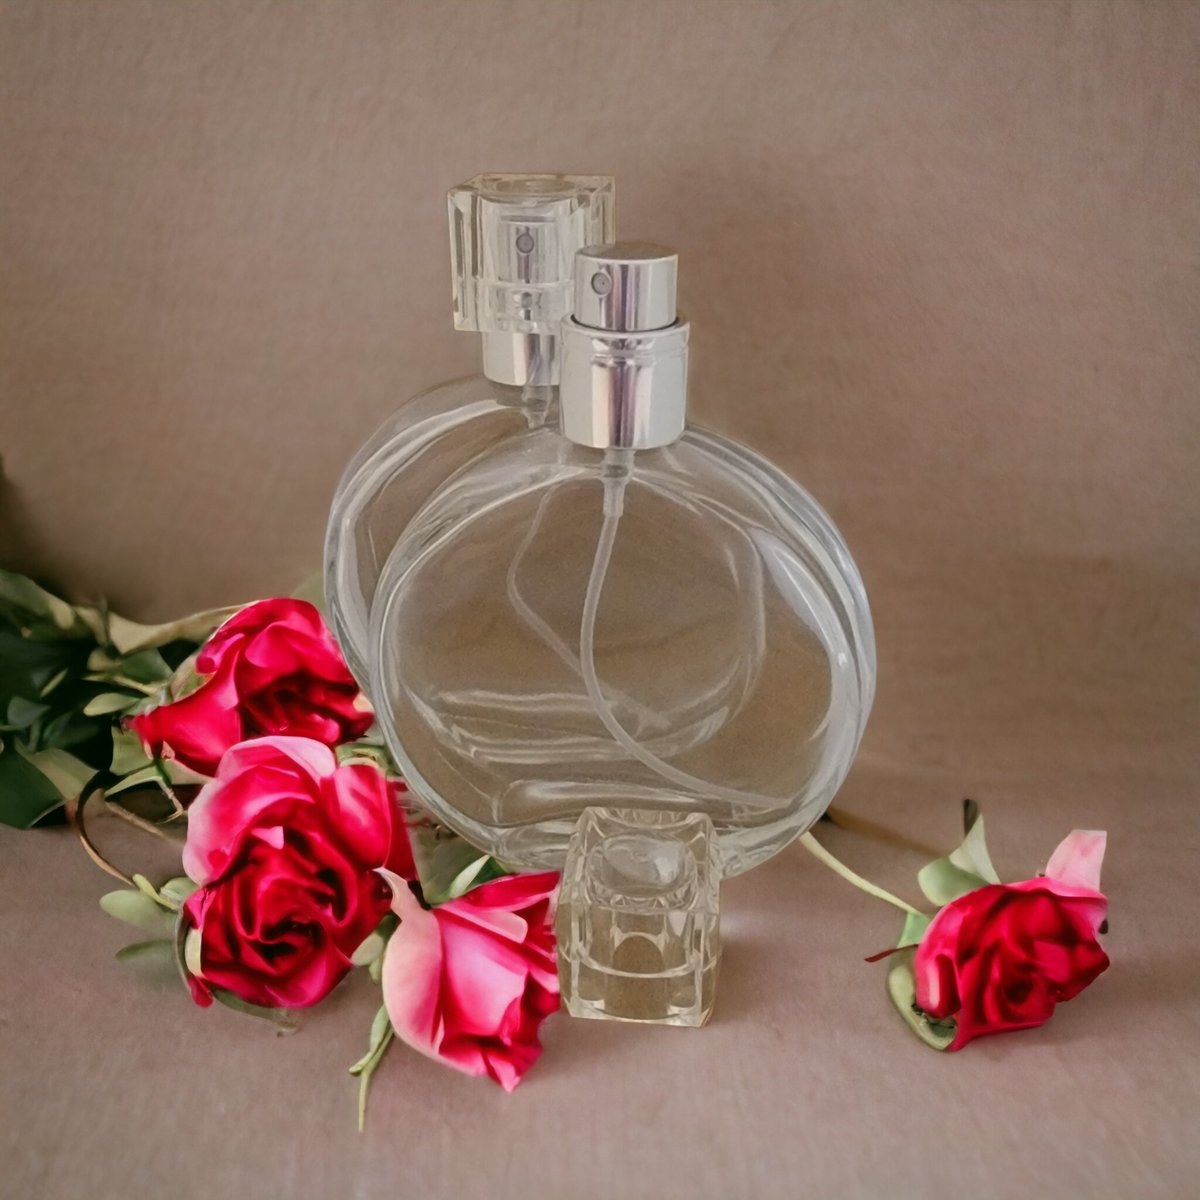 glassbottlesdirect.net.au
#cosmetics #Perfume #Aroma @EveryoneActive